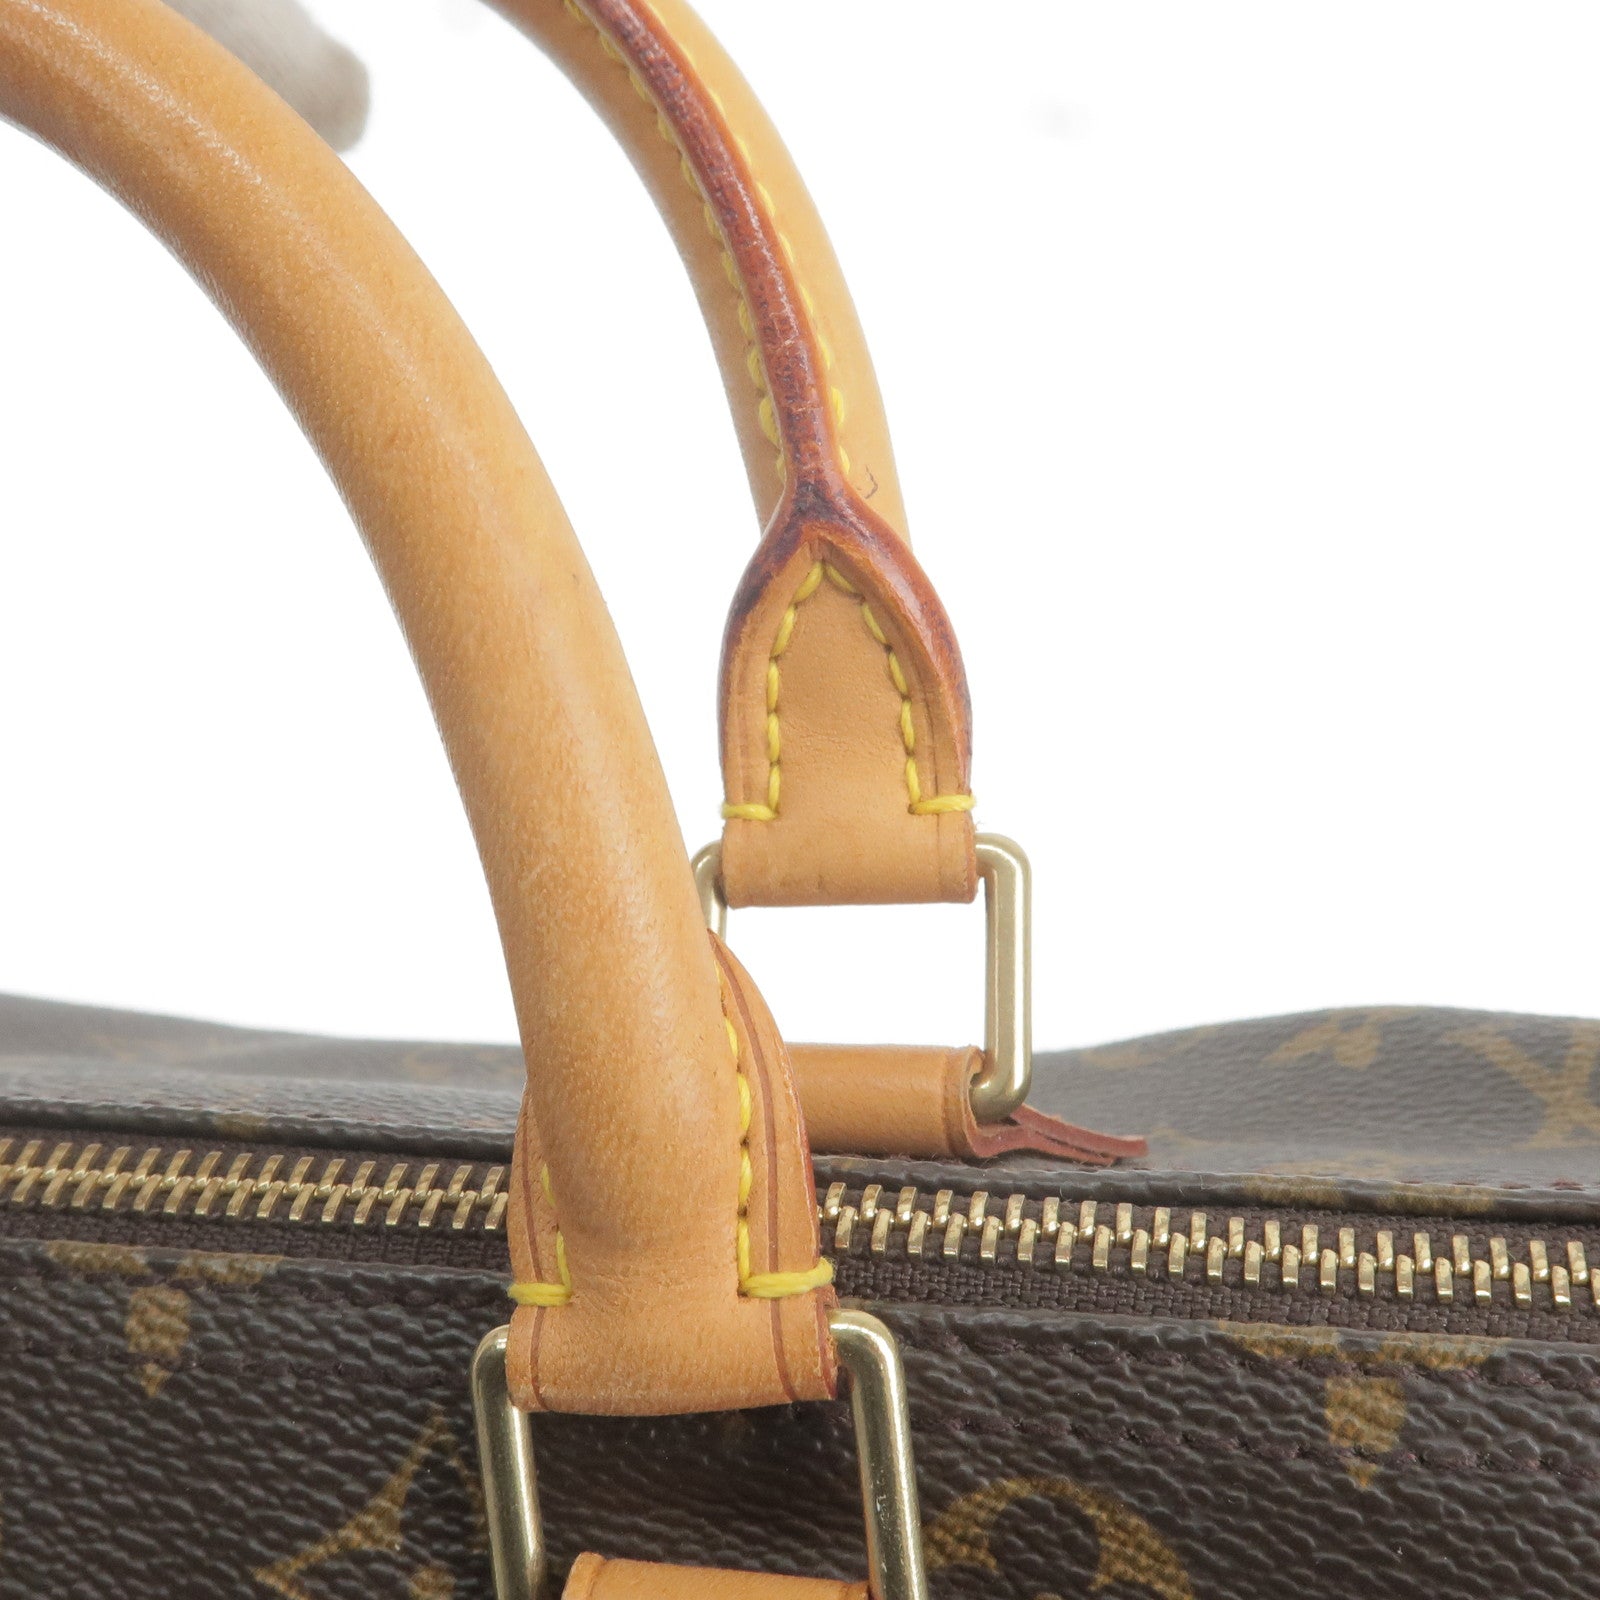 Louis-Vuitton-Monogram-Speedy-30-Hand-Bag-Boston-Bag-M41108 – dct